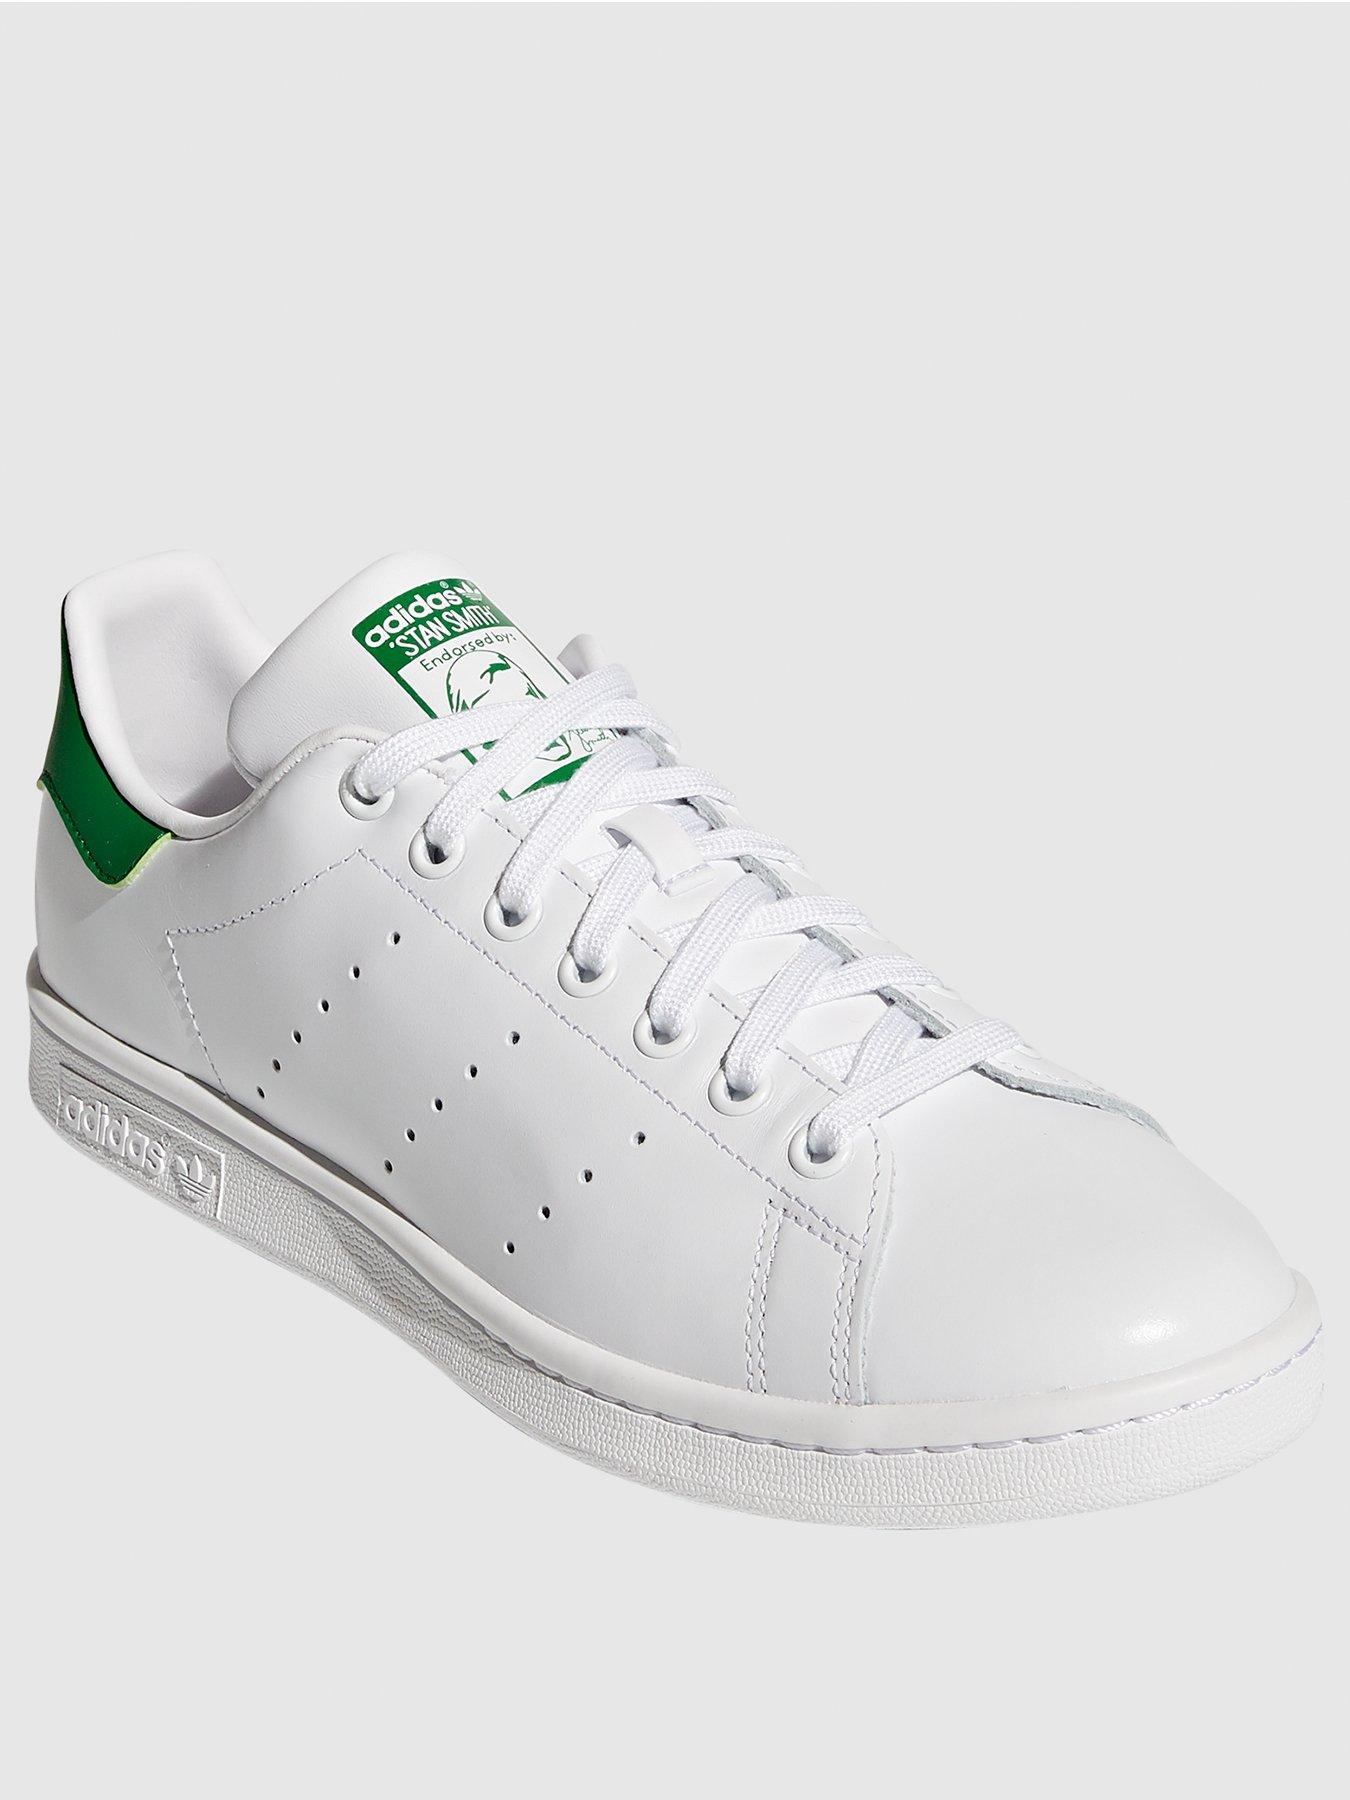 stan smith adidas green and white